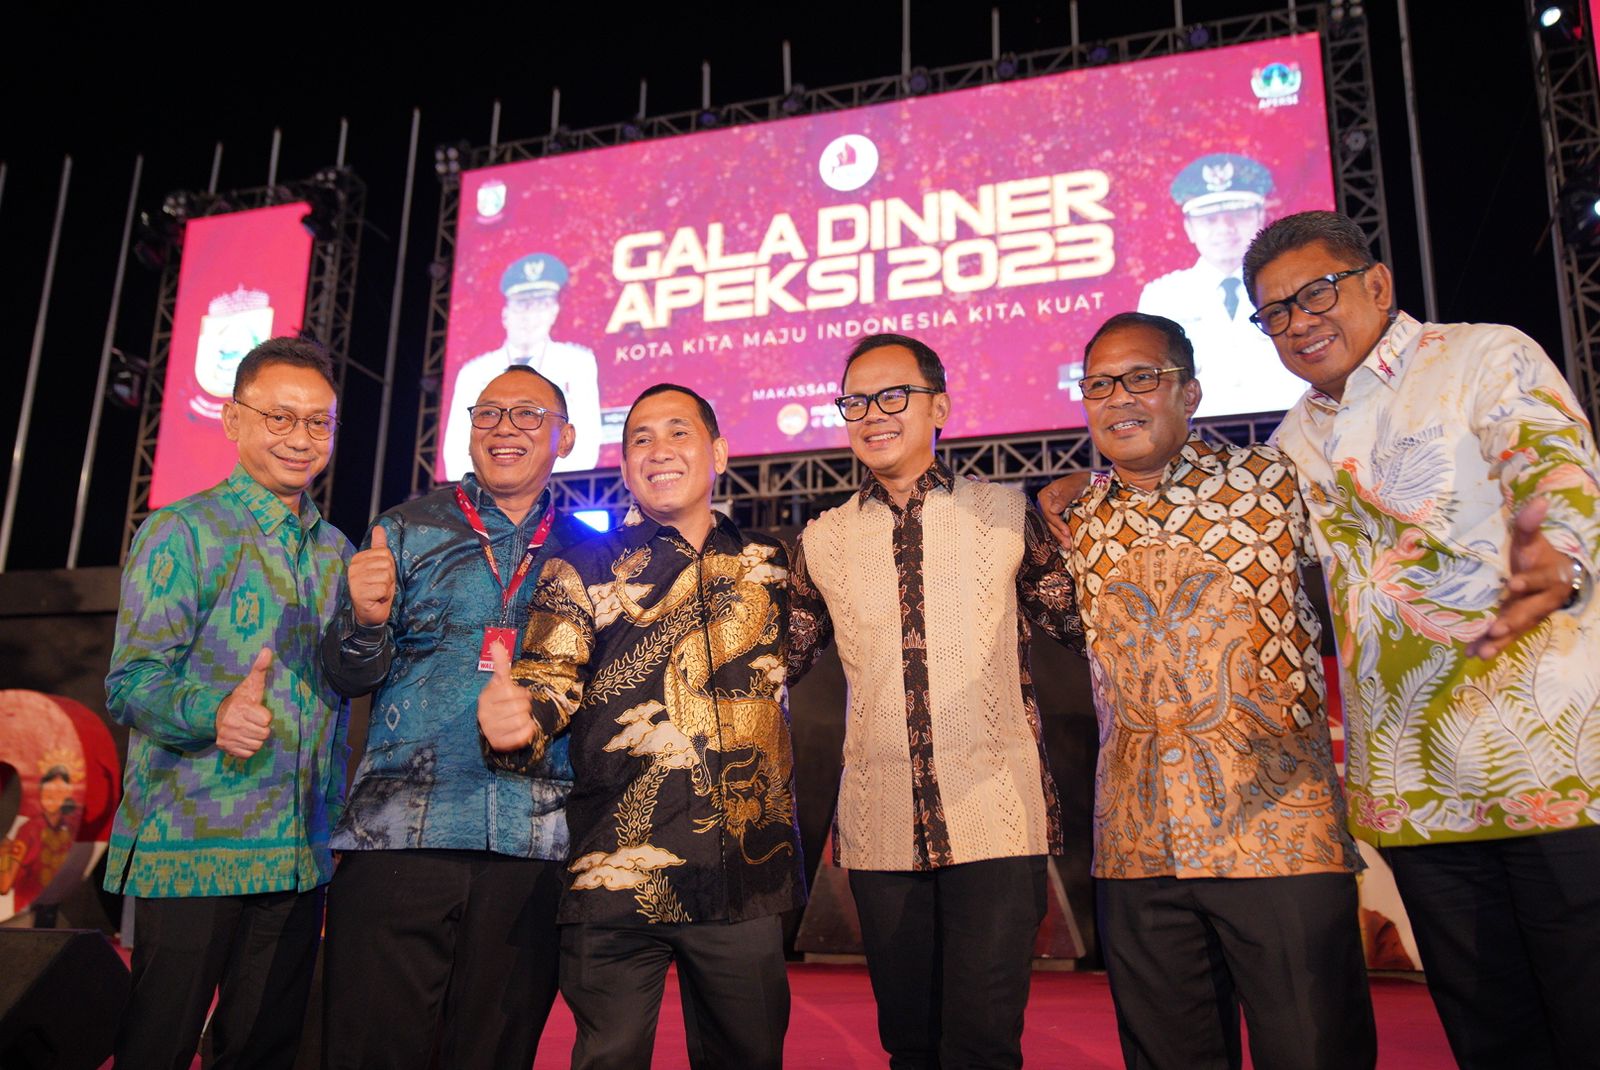 Wali Kota Pontianak, Edi Rusdi Kamtono (kiri) foto bersama Ketua Dewan Pengurus Apeksi Bima Arya (keempat dari kiri) serta sejumlah Wali Kota yang hadir pada Rakernas Apeksi XVI di Makassar, Sulsel. (Foto: Indri)